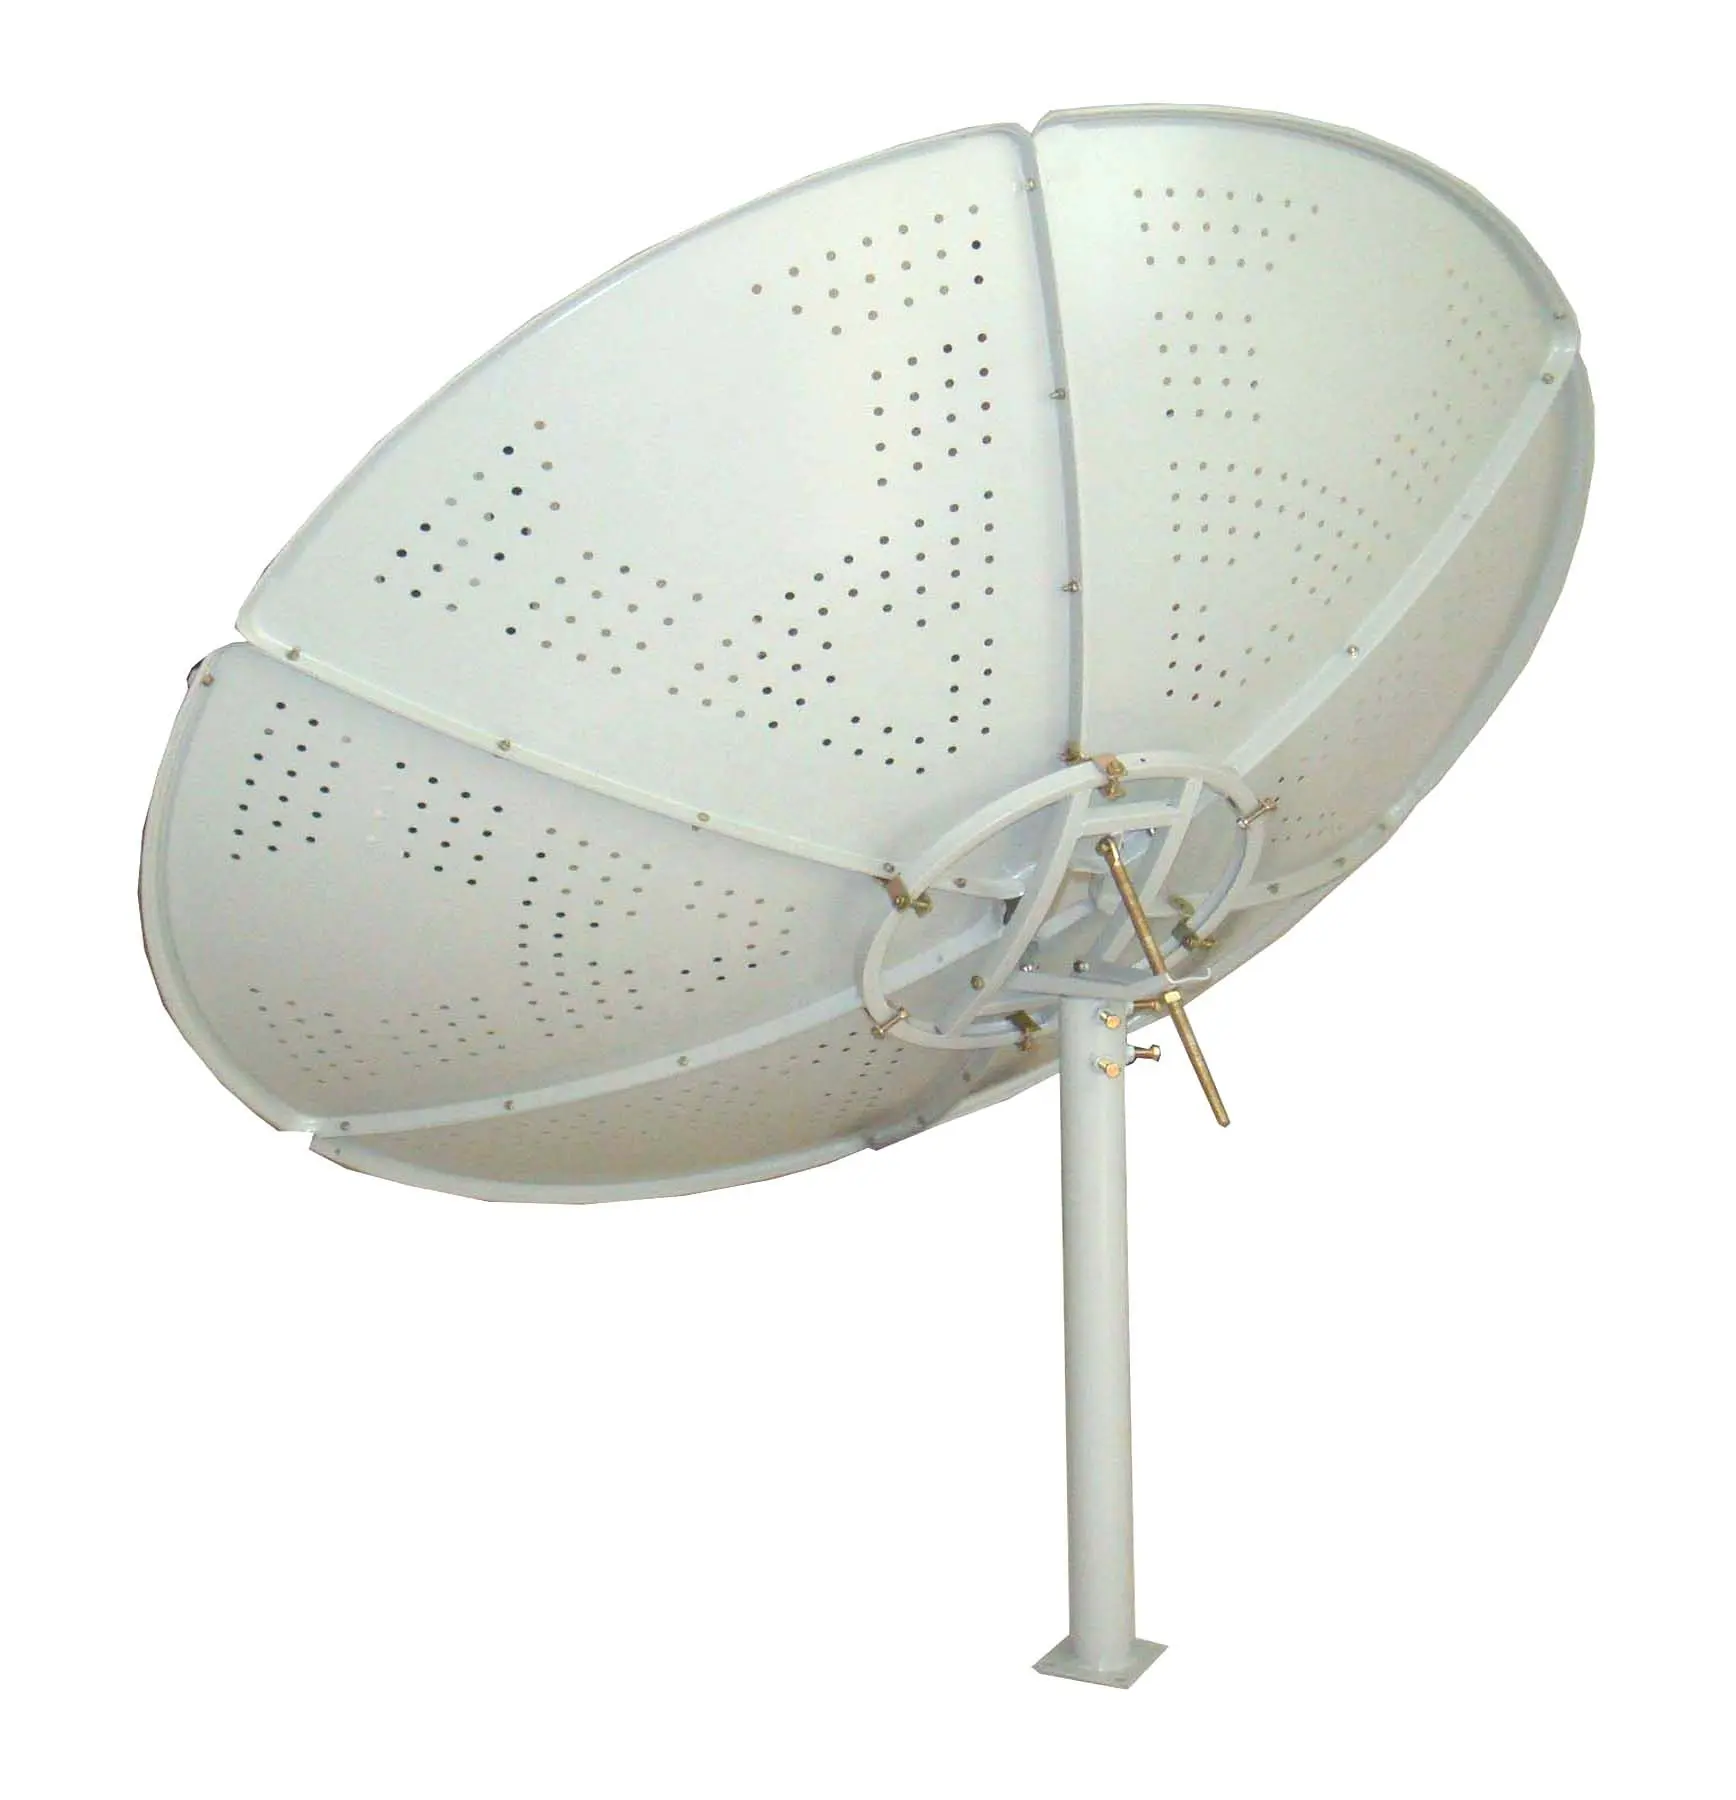 c band 5ft(150cm) satellite dish antenna pole mount with holes